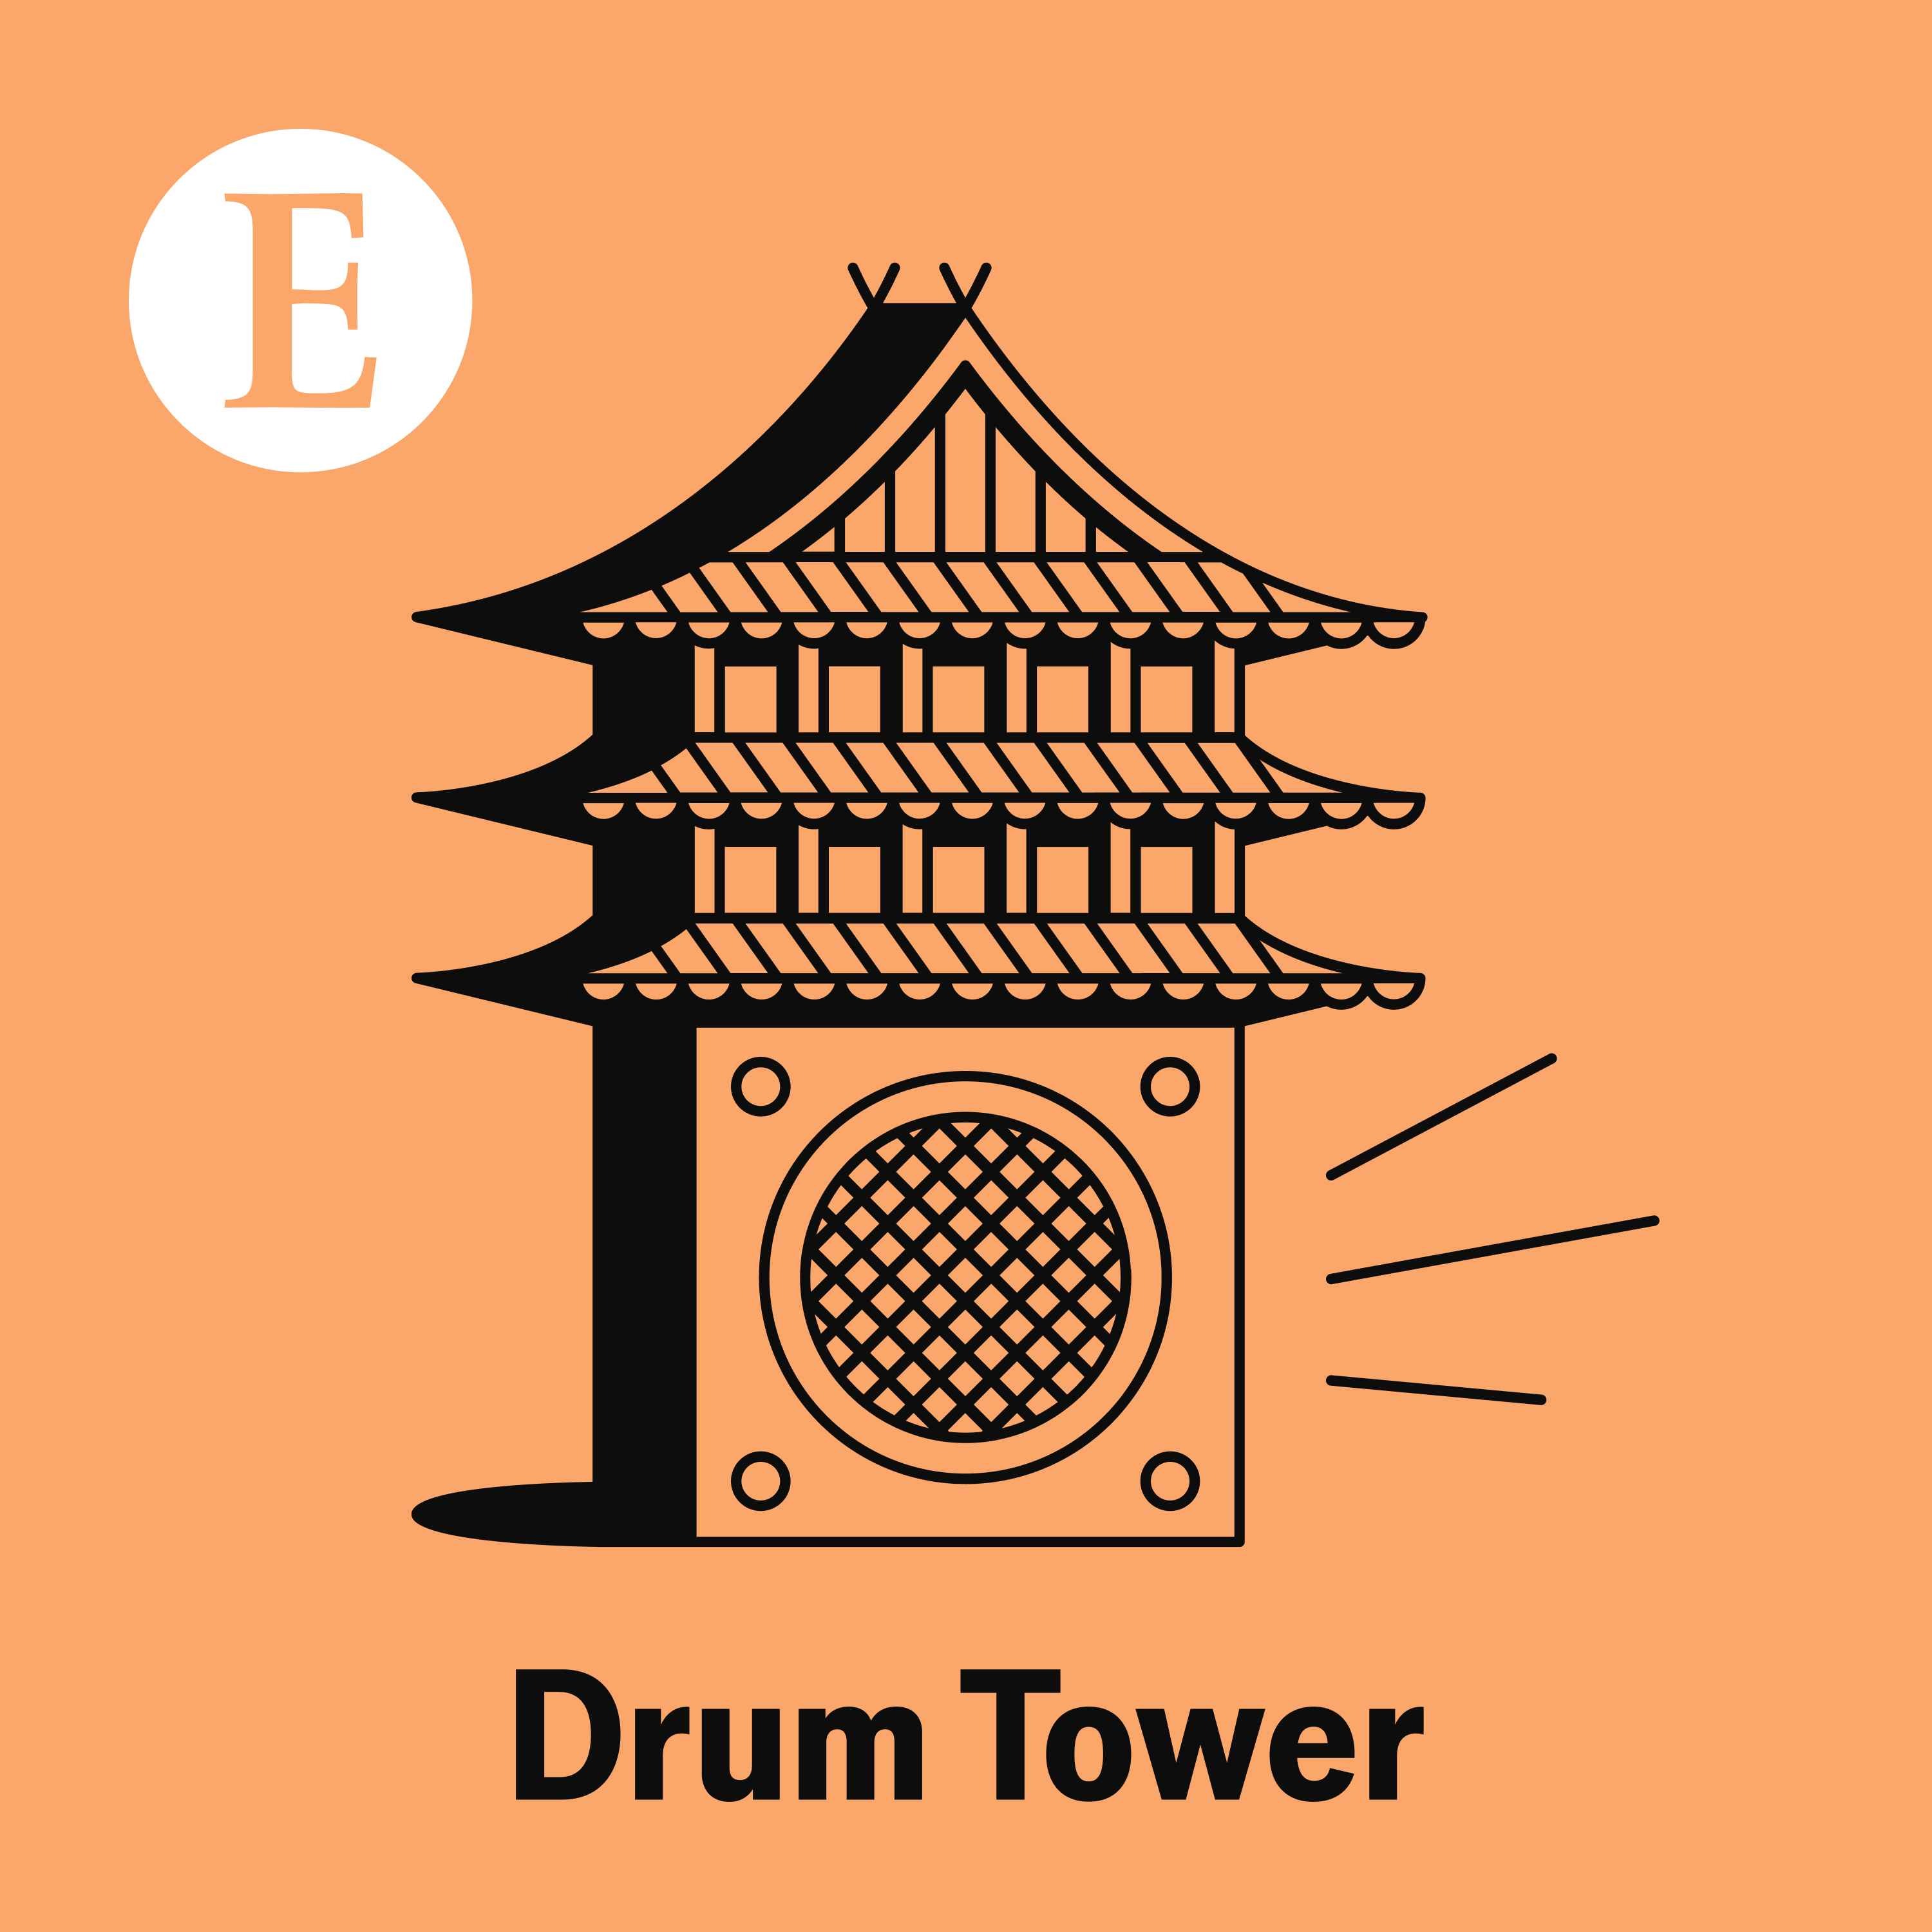 Drum Tower: Xi’s doomed economic plan